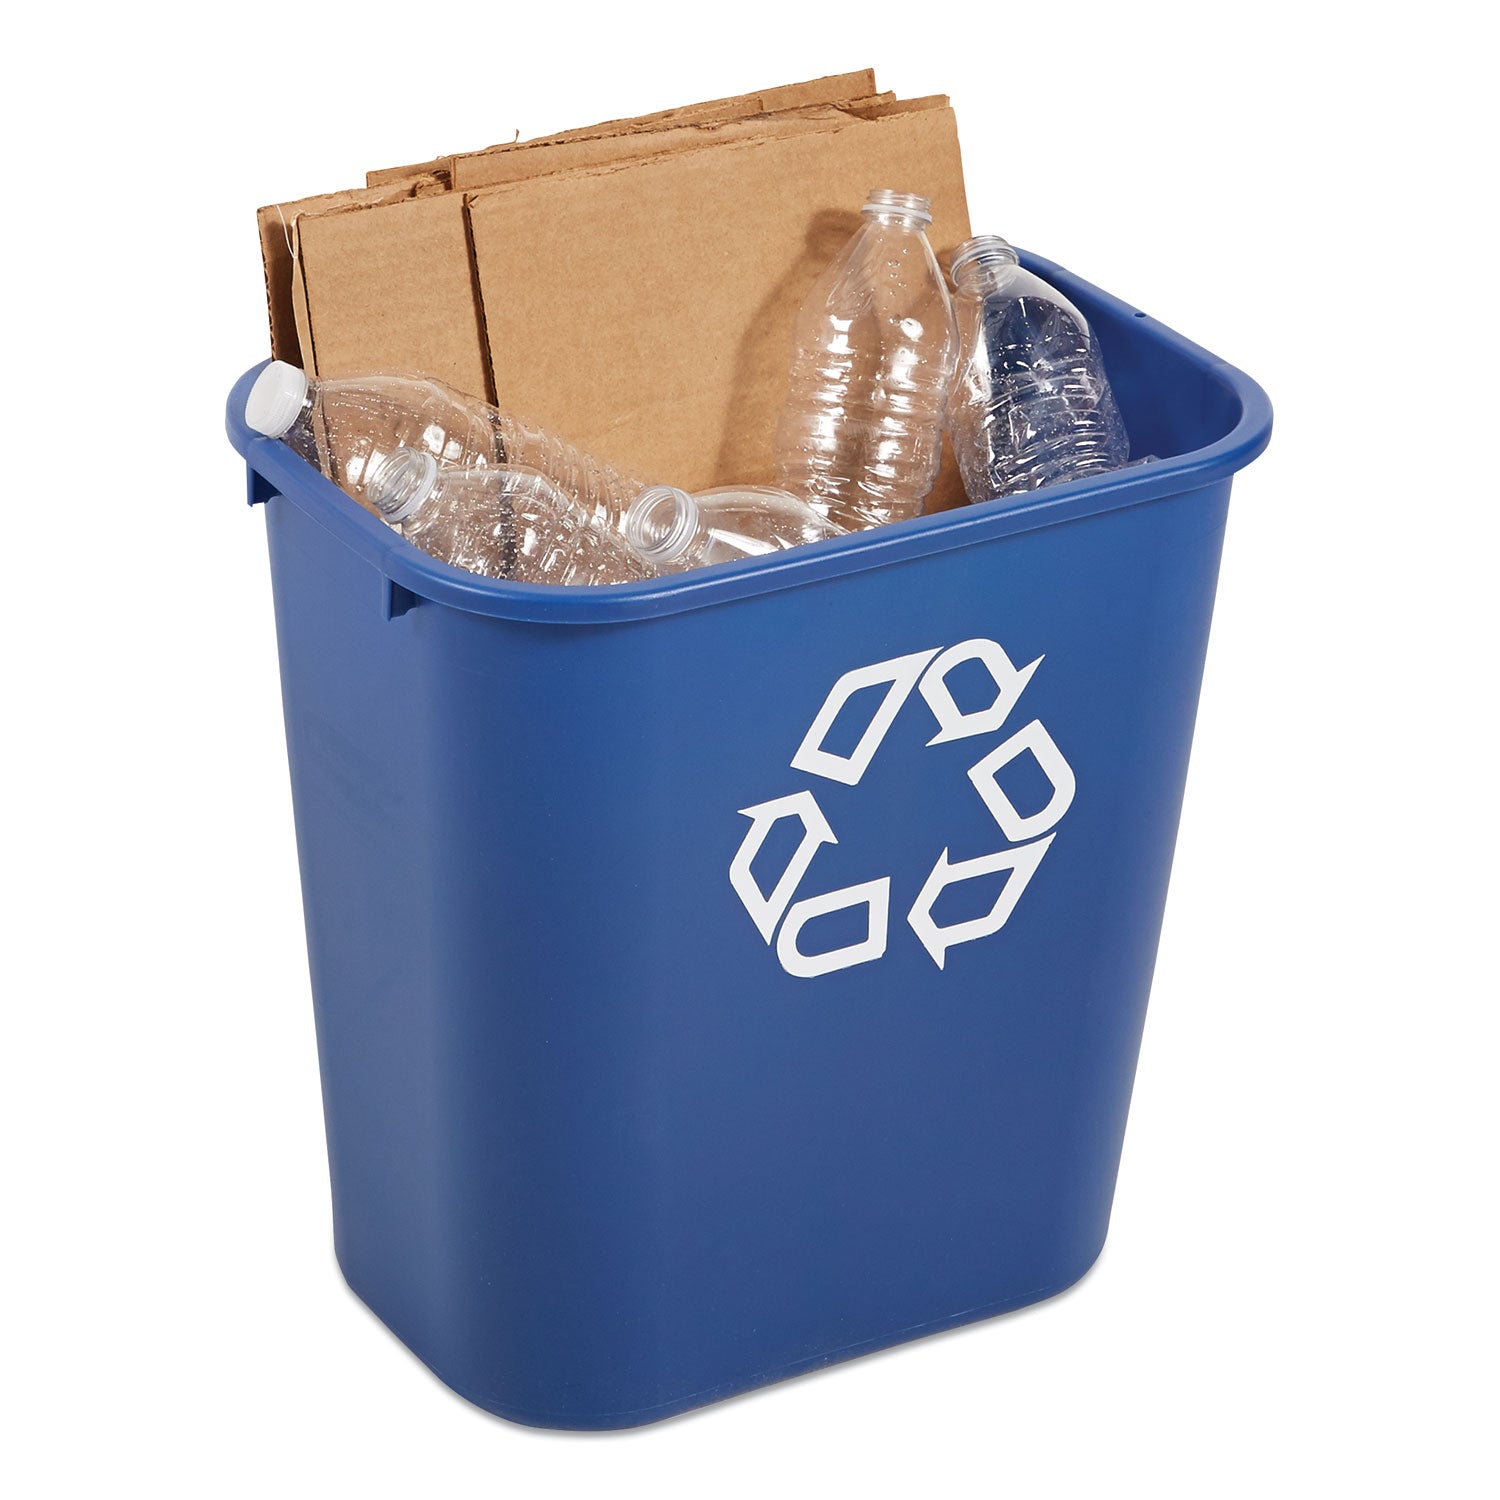 Deskside Recycling Container, Medium, 28.13 qt, Plastic, Blue - 